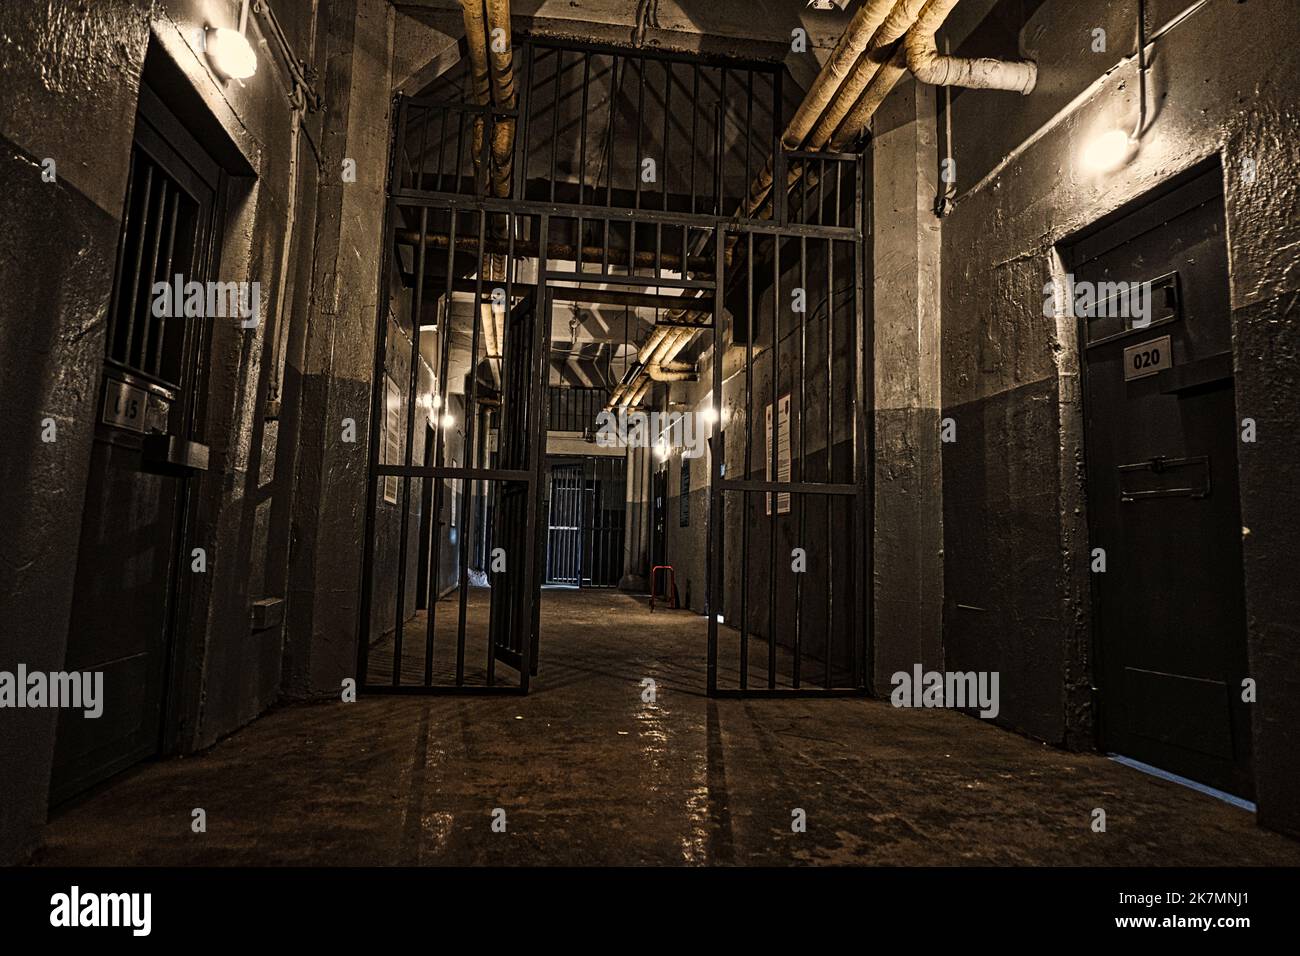 bars and empty prison corridors Stock Photo